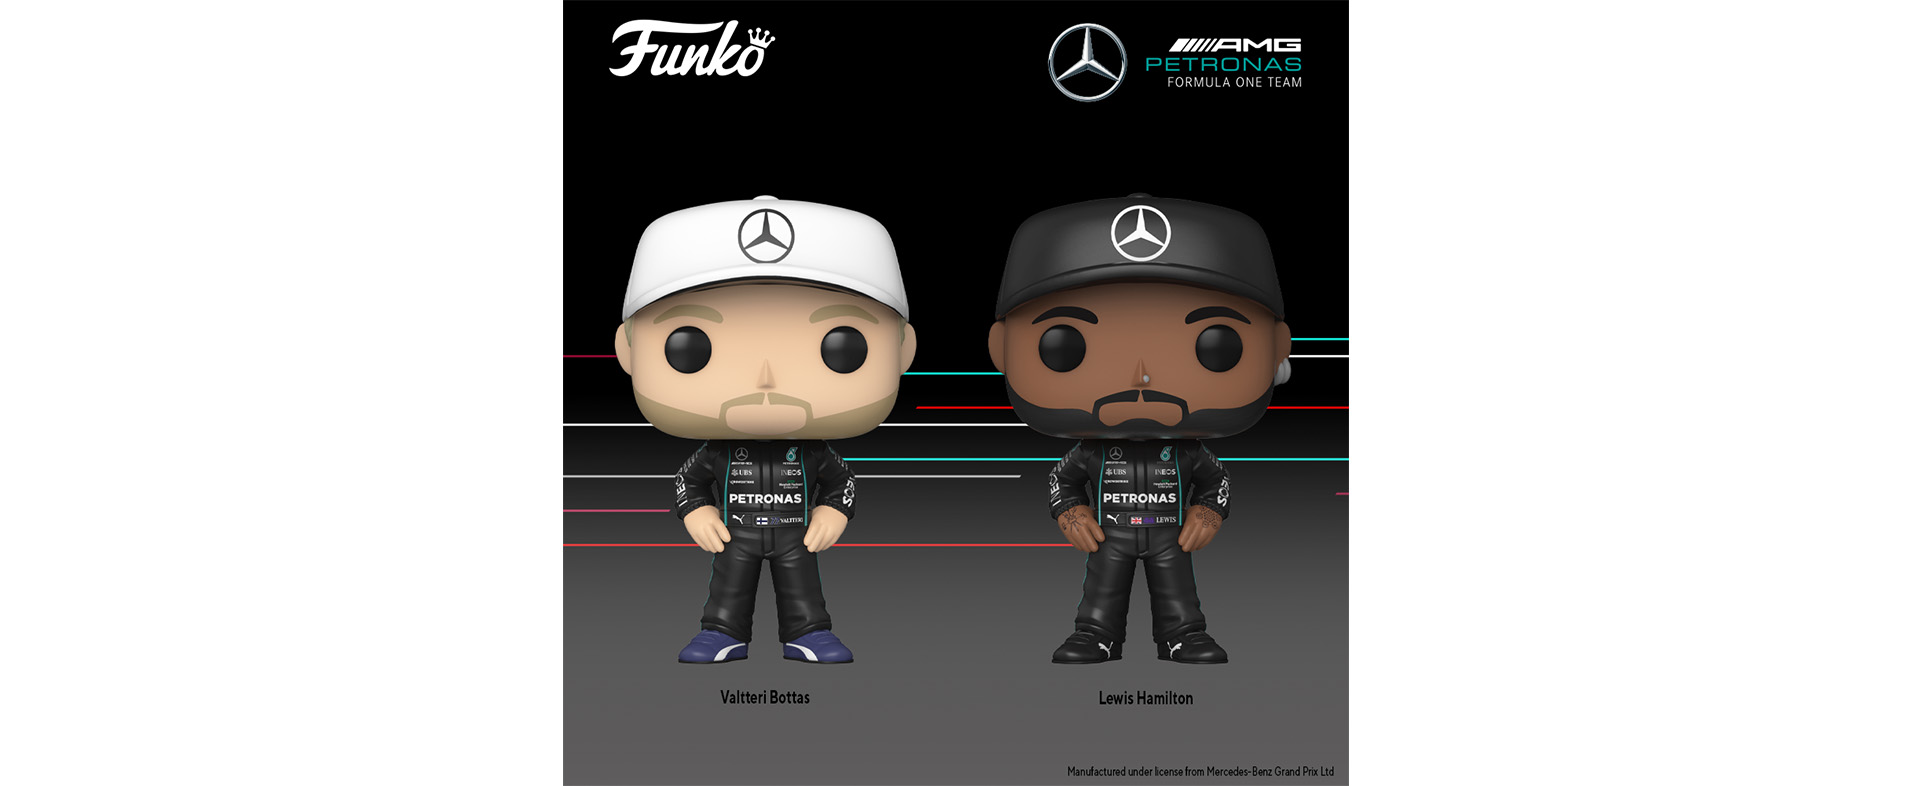 Funko on X: Coming soon: POP! Racing - Mercedes-AMG Petronas